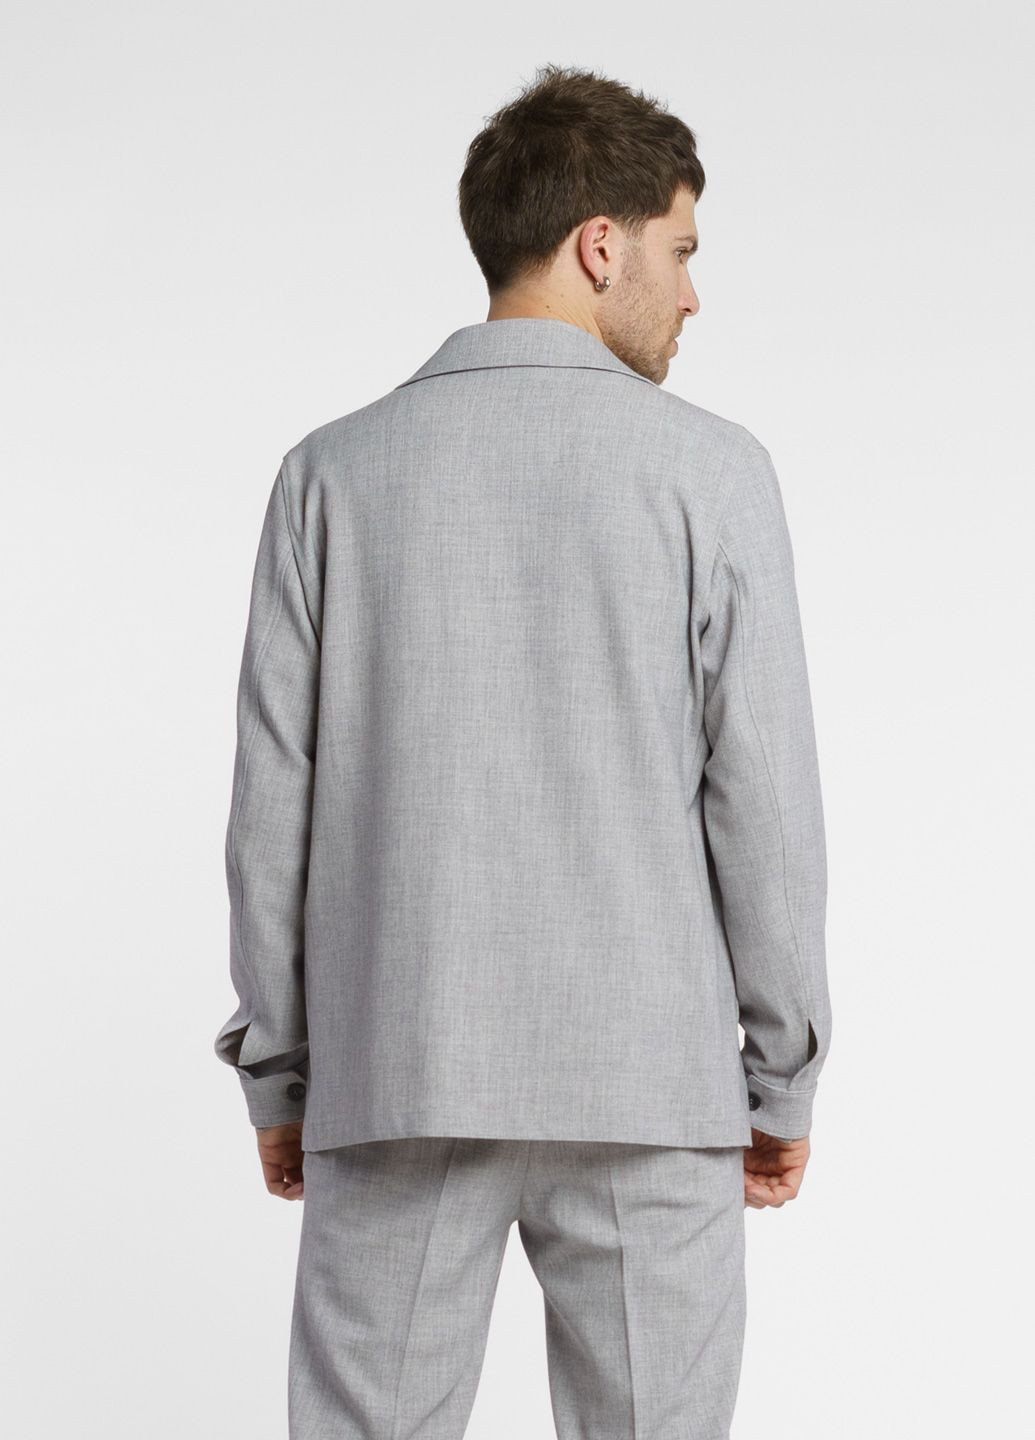 Пиджак мужской серый Arber palermo (278063702)